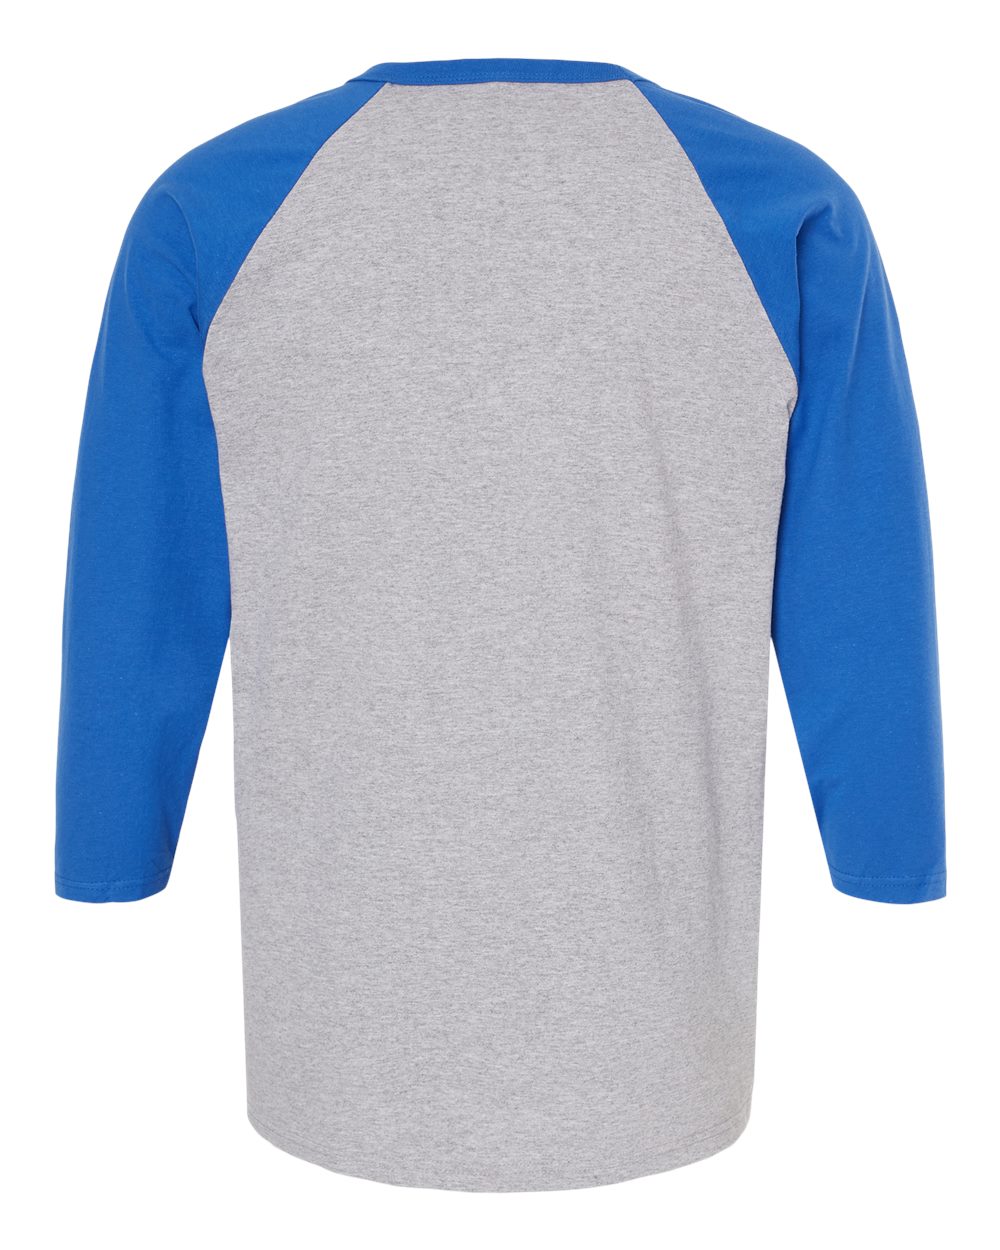 M&O Raglan Three-Quarter Sleeve Baseball T-Shirt 5540 #color_Sport Grey/ Royal